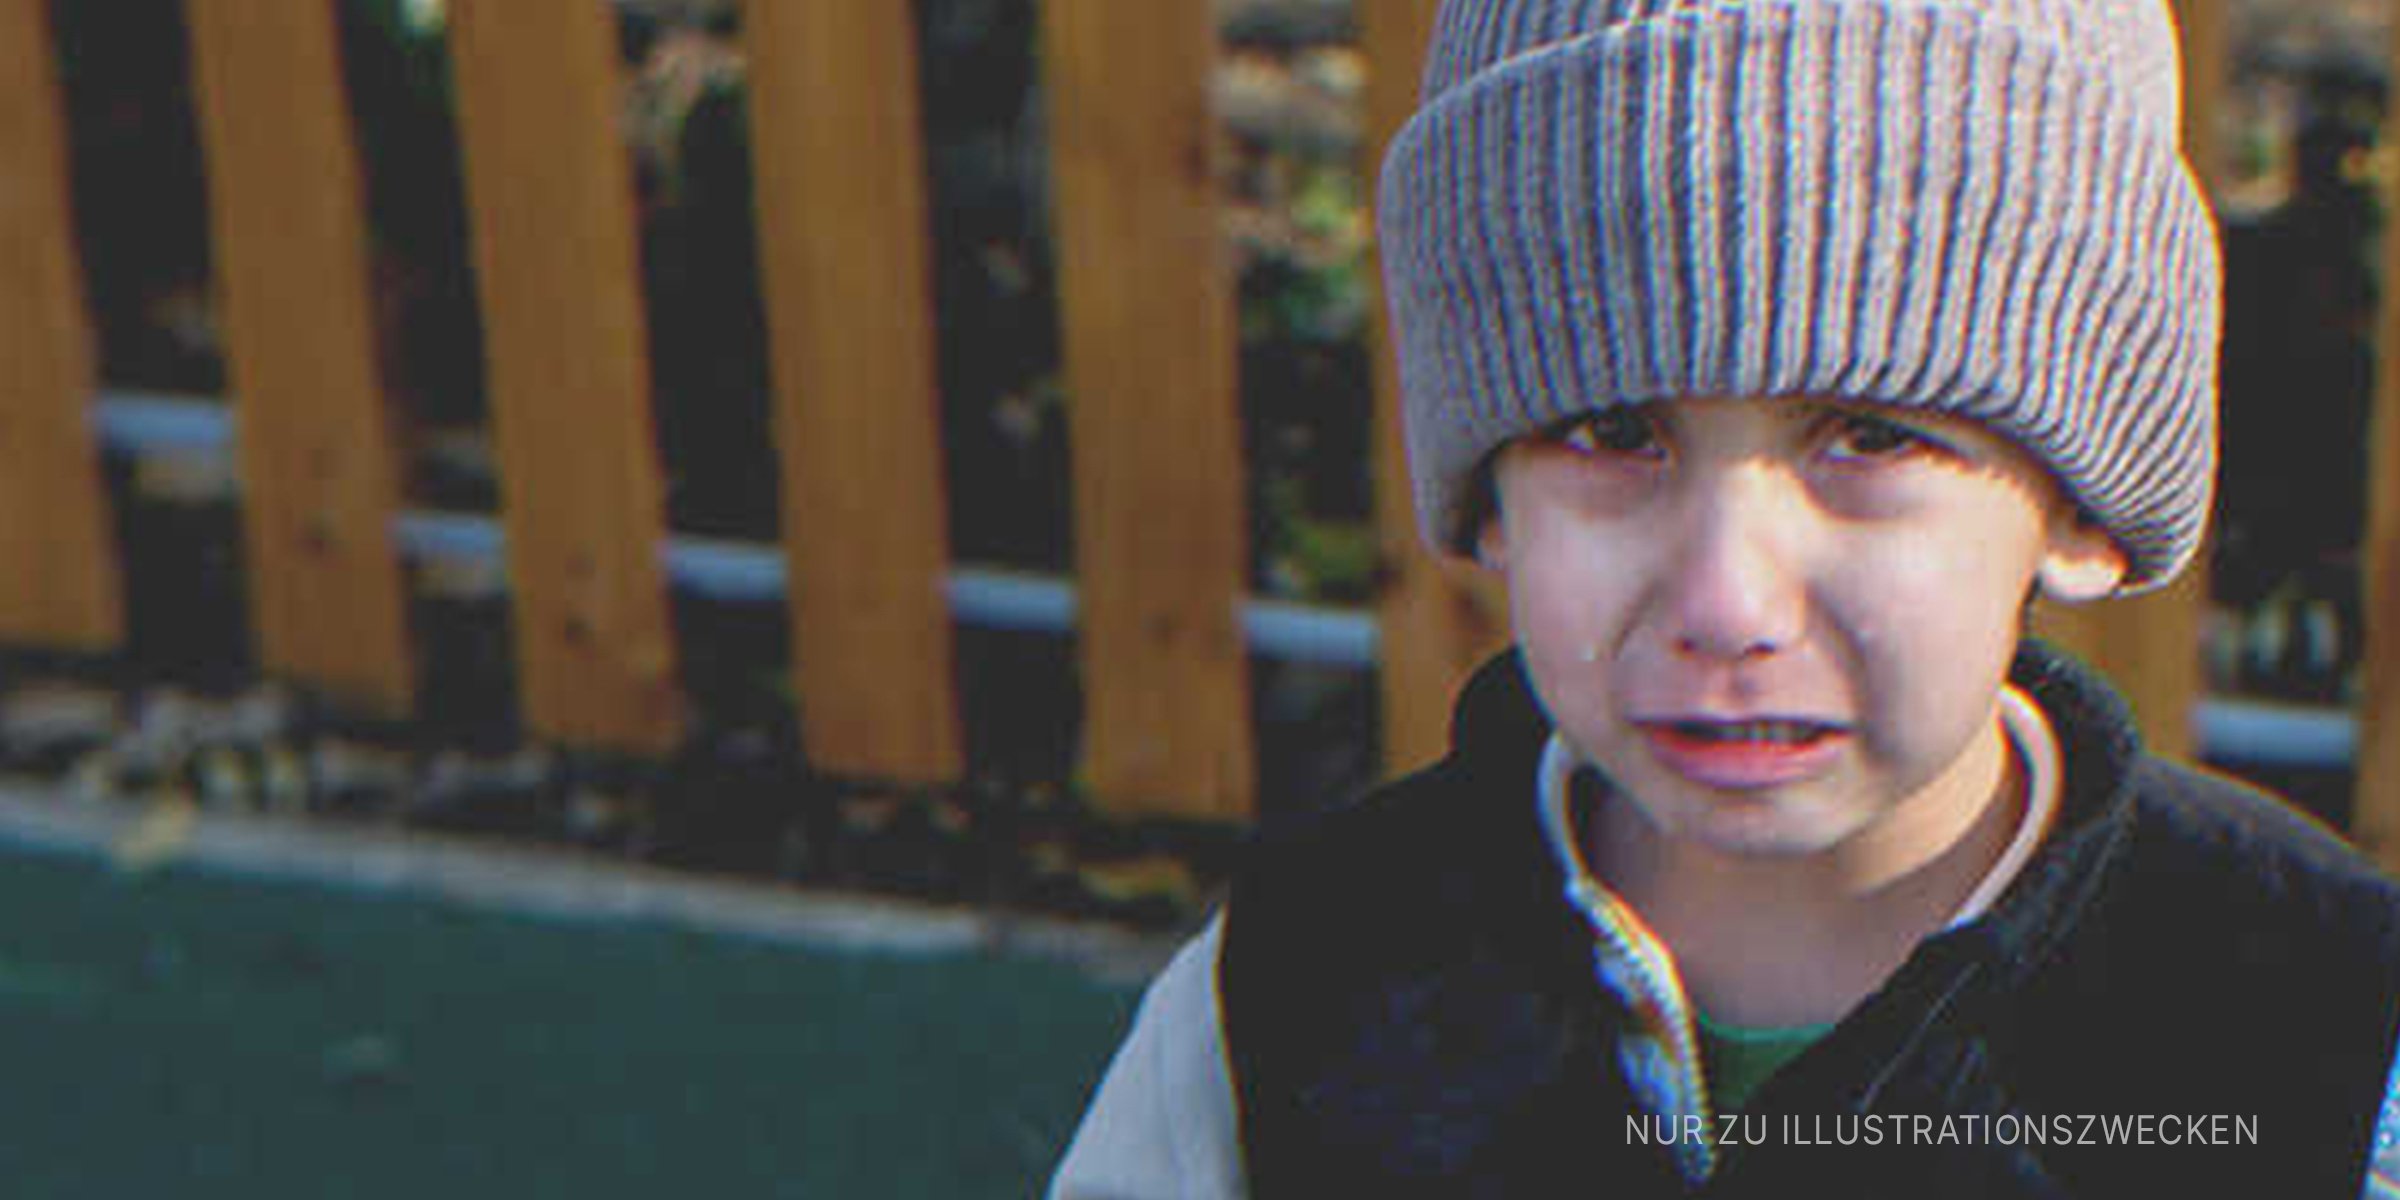 Junge weint | Quelle: Shutterstock